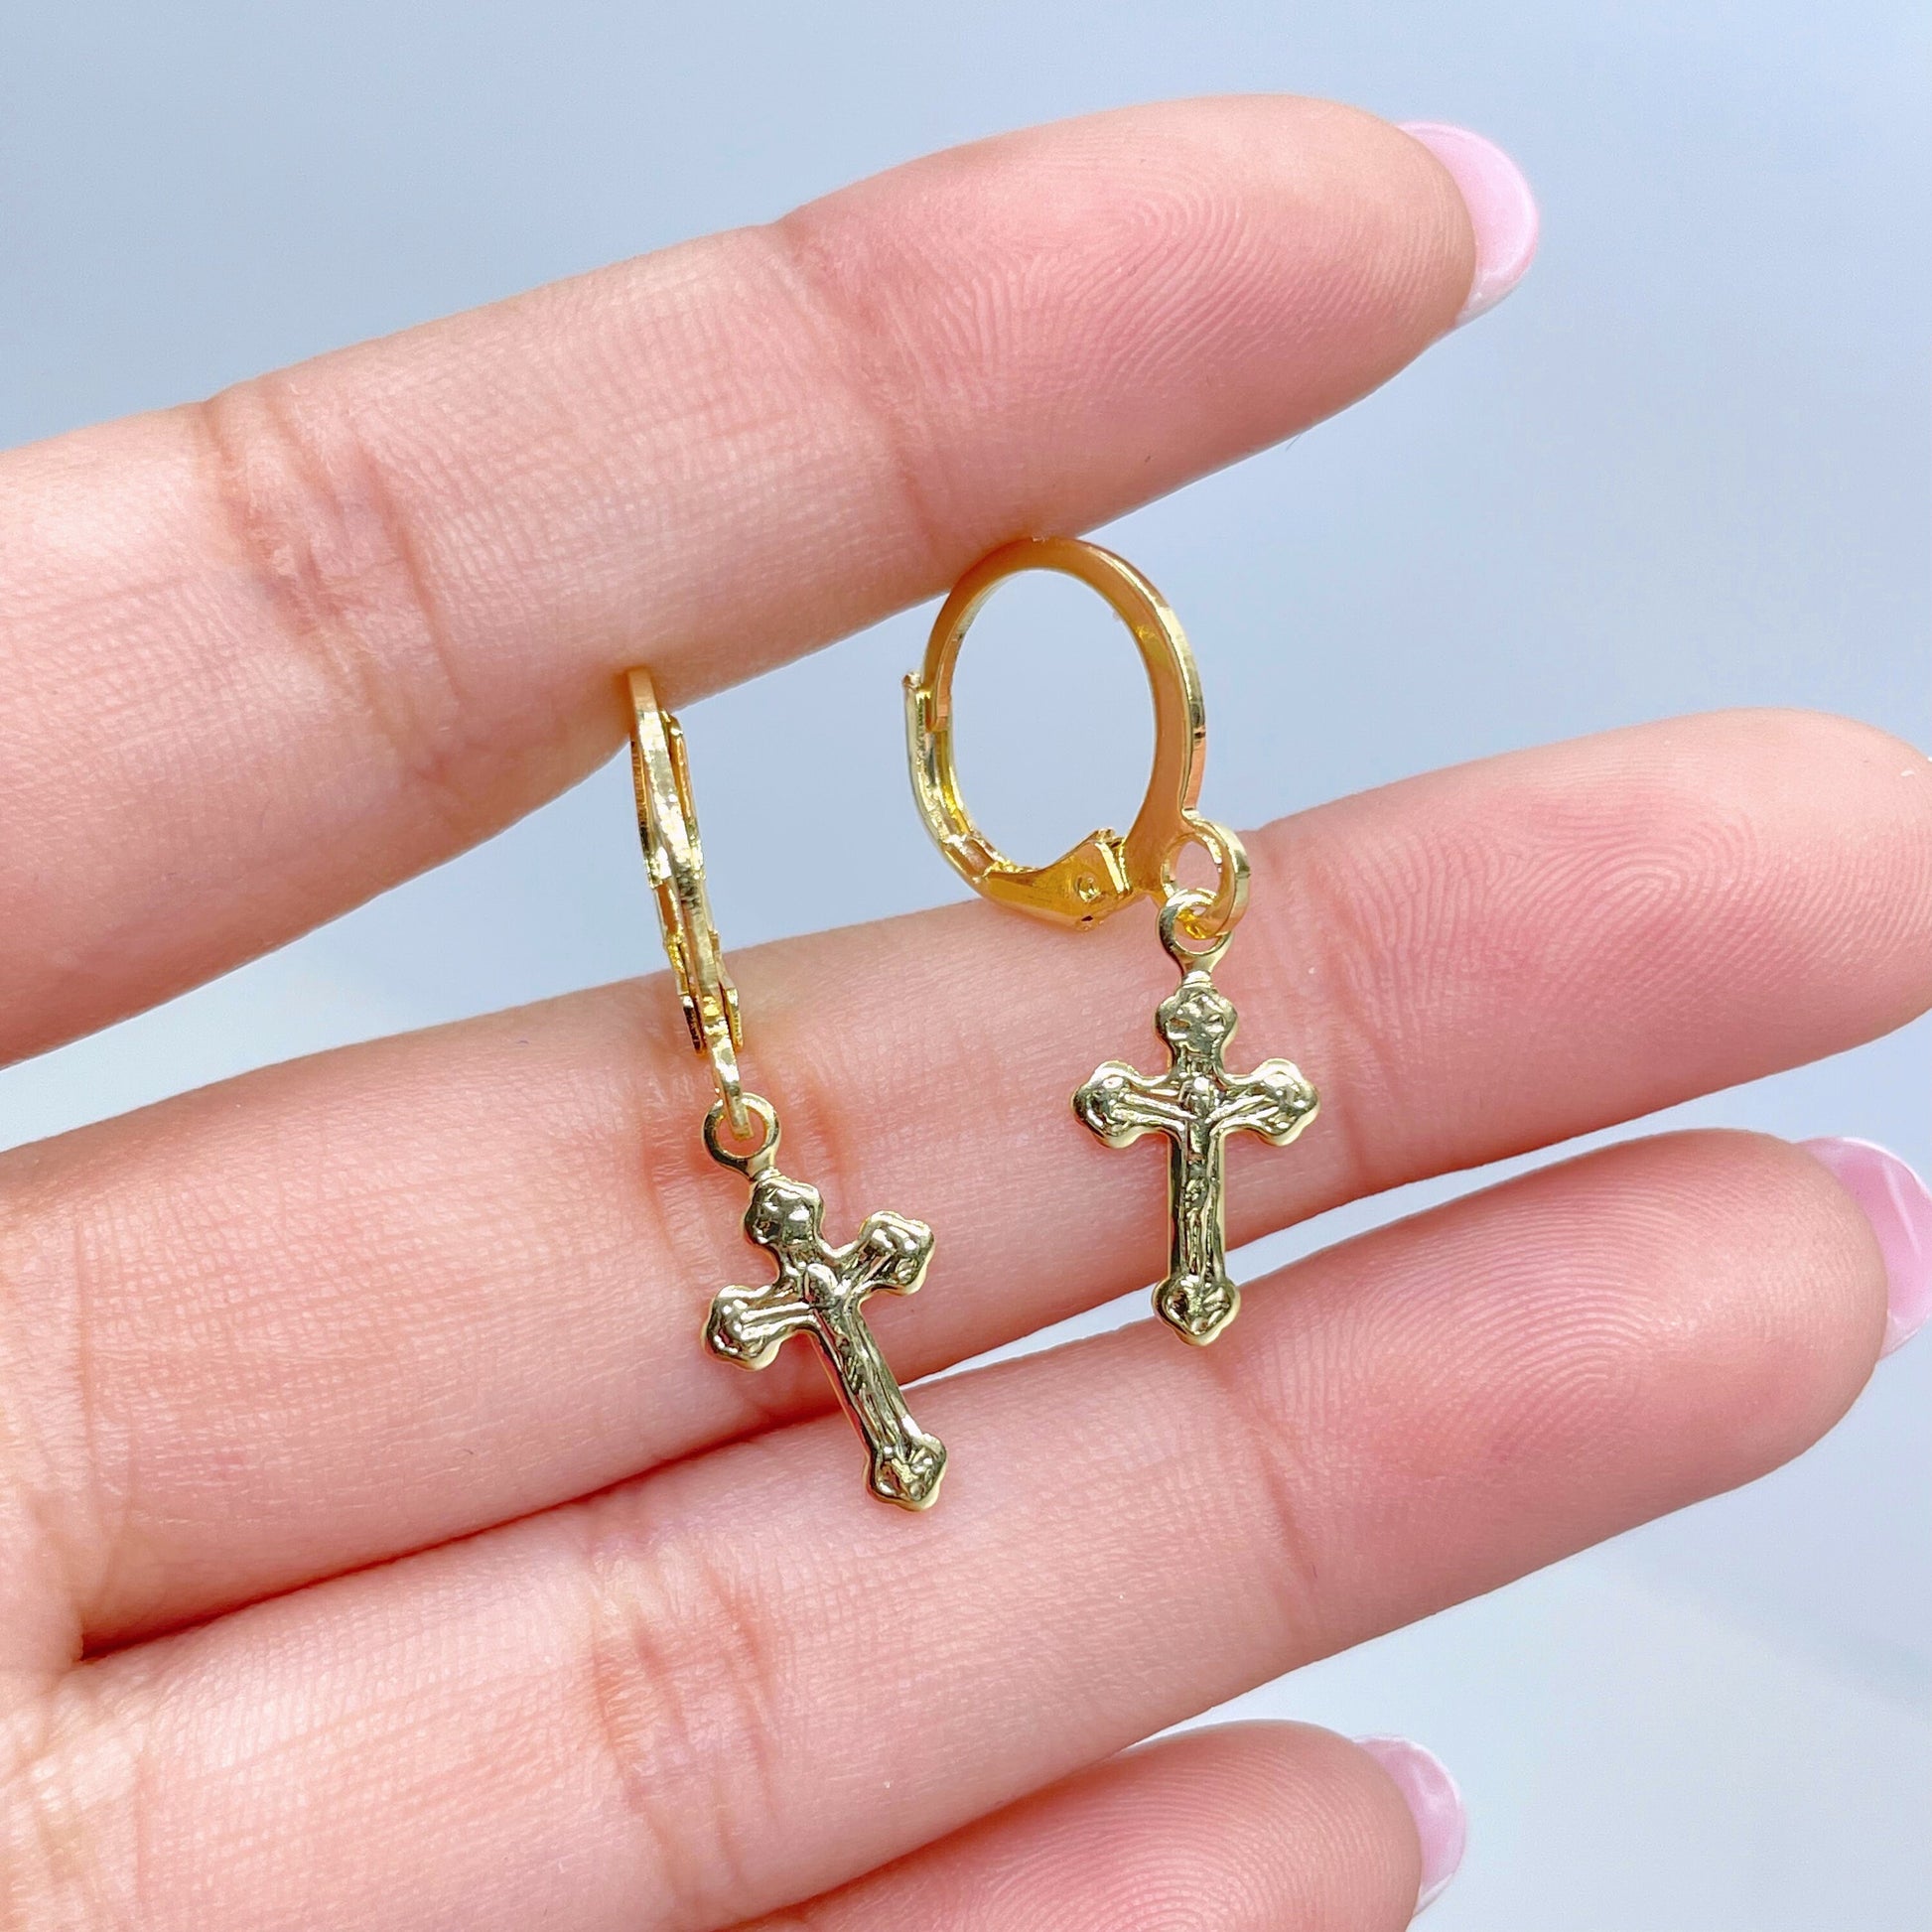 18k Gold Filled 12mm Huggie Earrings with Jesus Christ Crucifix Cross Shape Charm, Dangle Earrings, Wholesale Jewelry Making Supplies